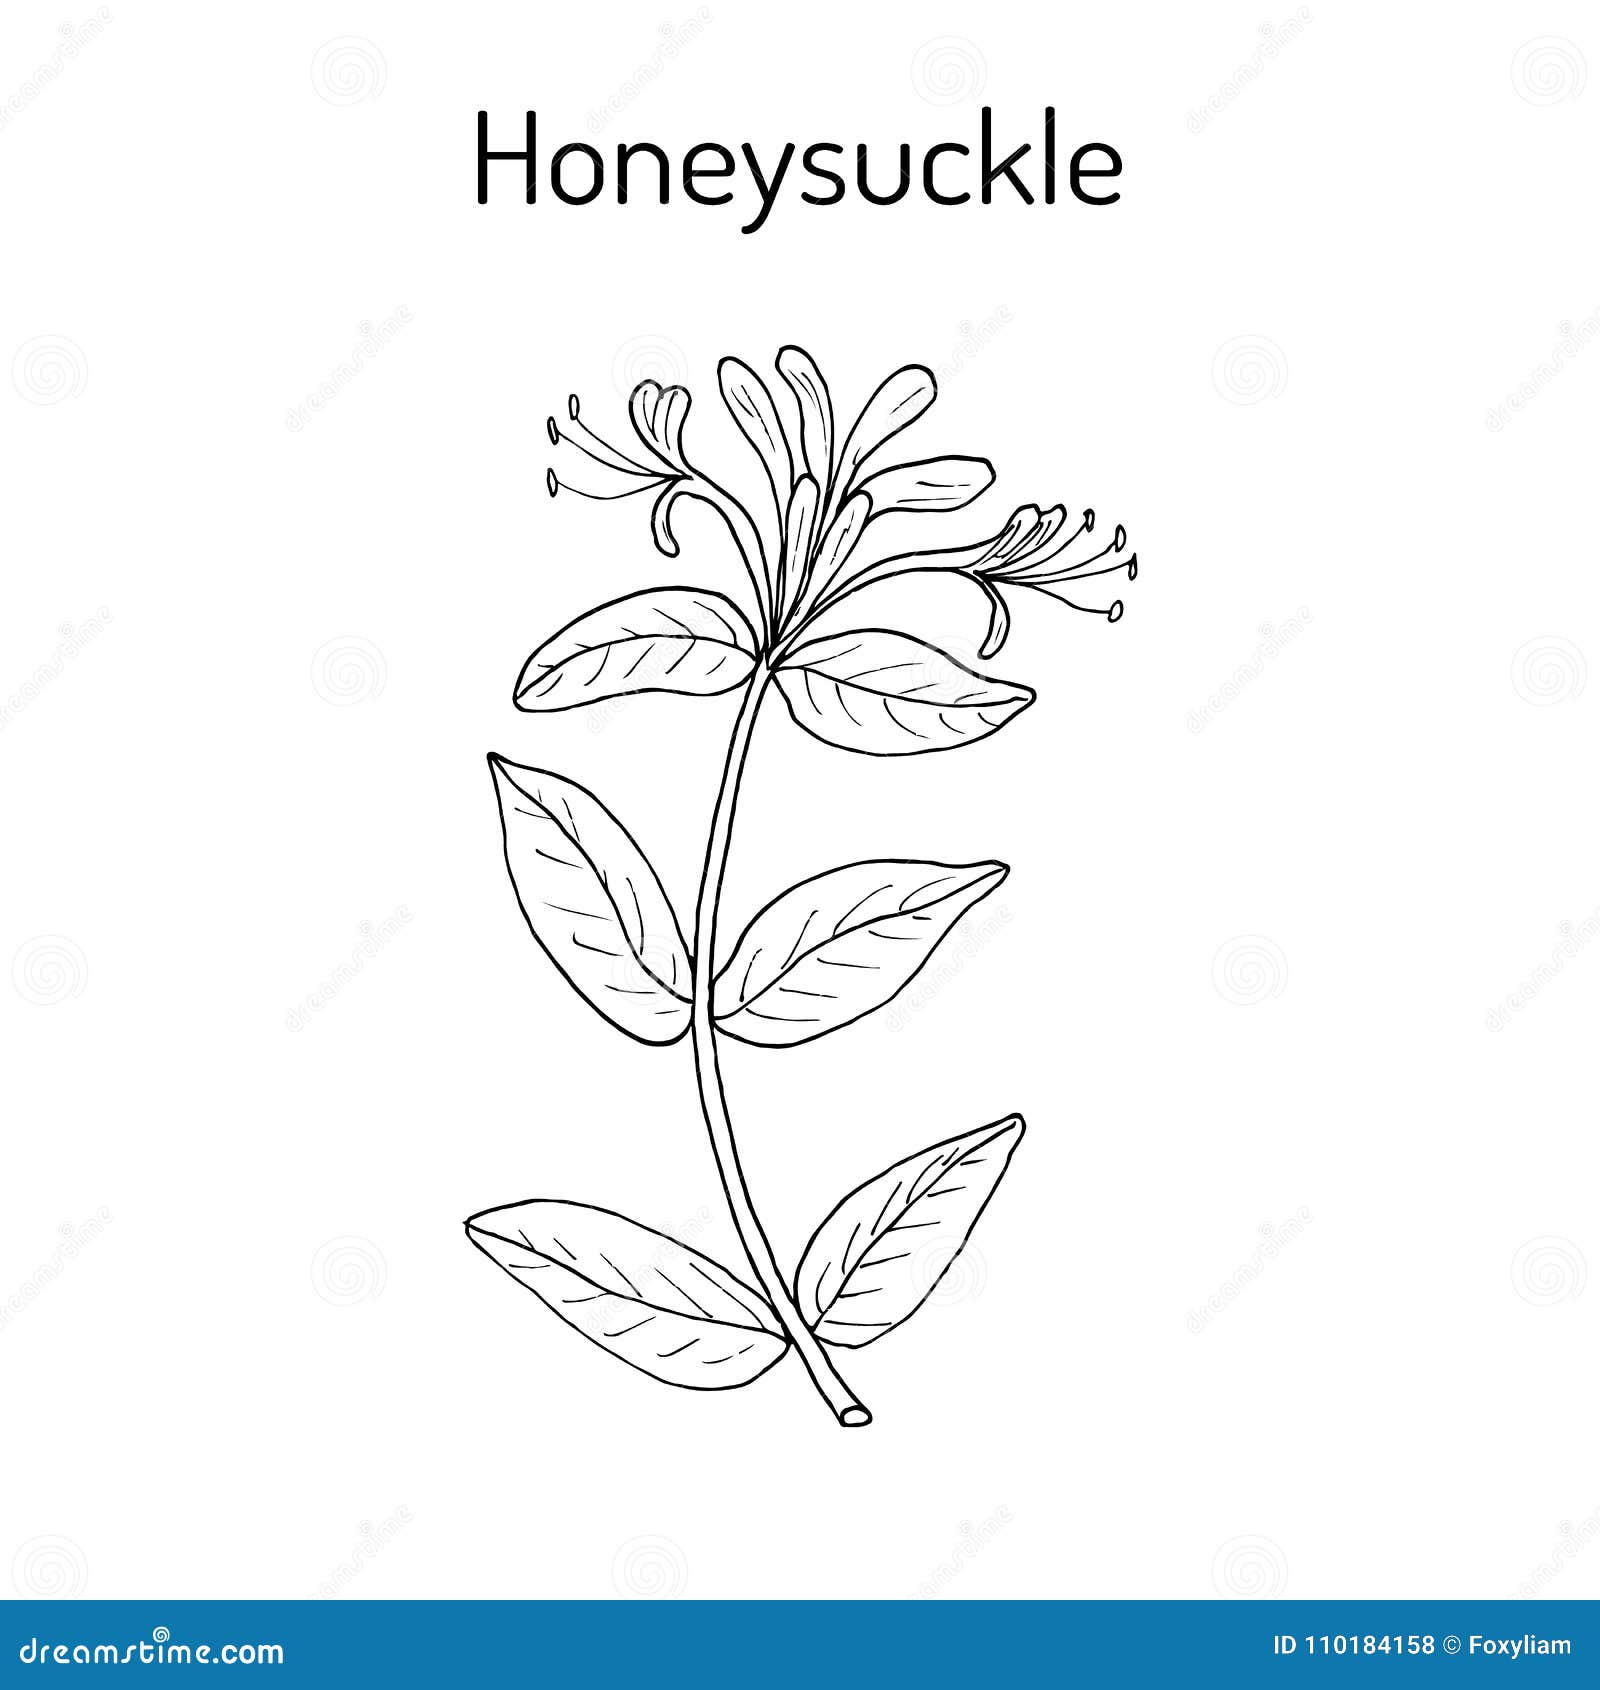 310 Drawing Of The Honeysuckle Flowers Illustrations RoyaltyFree Vector  Graphics  Clip Art  iStock